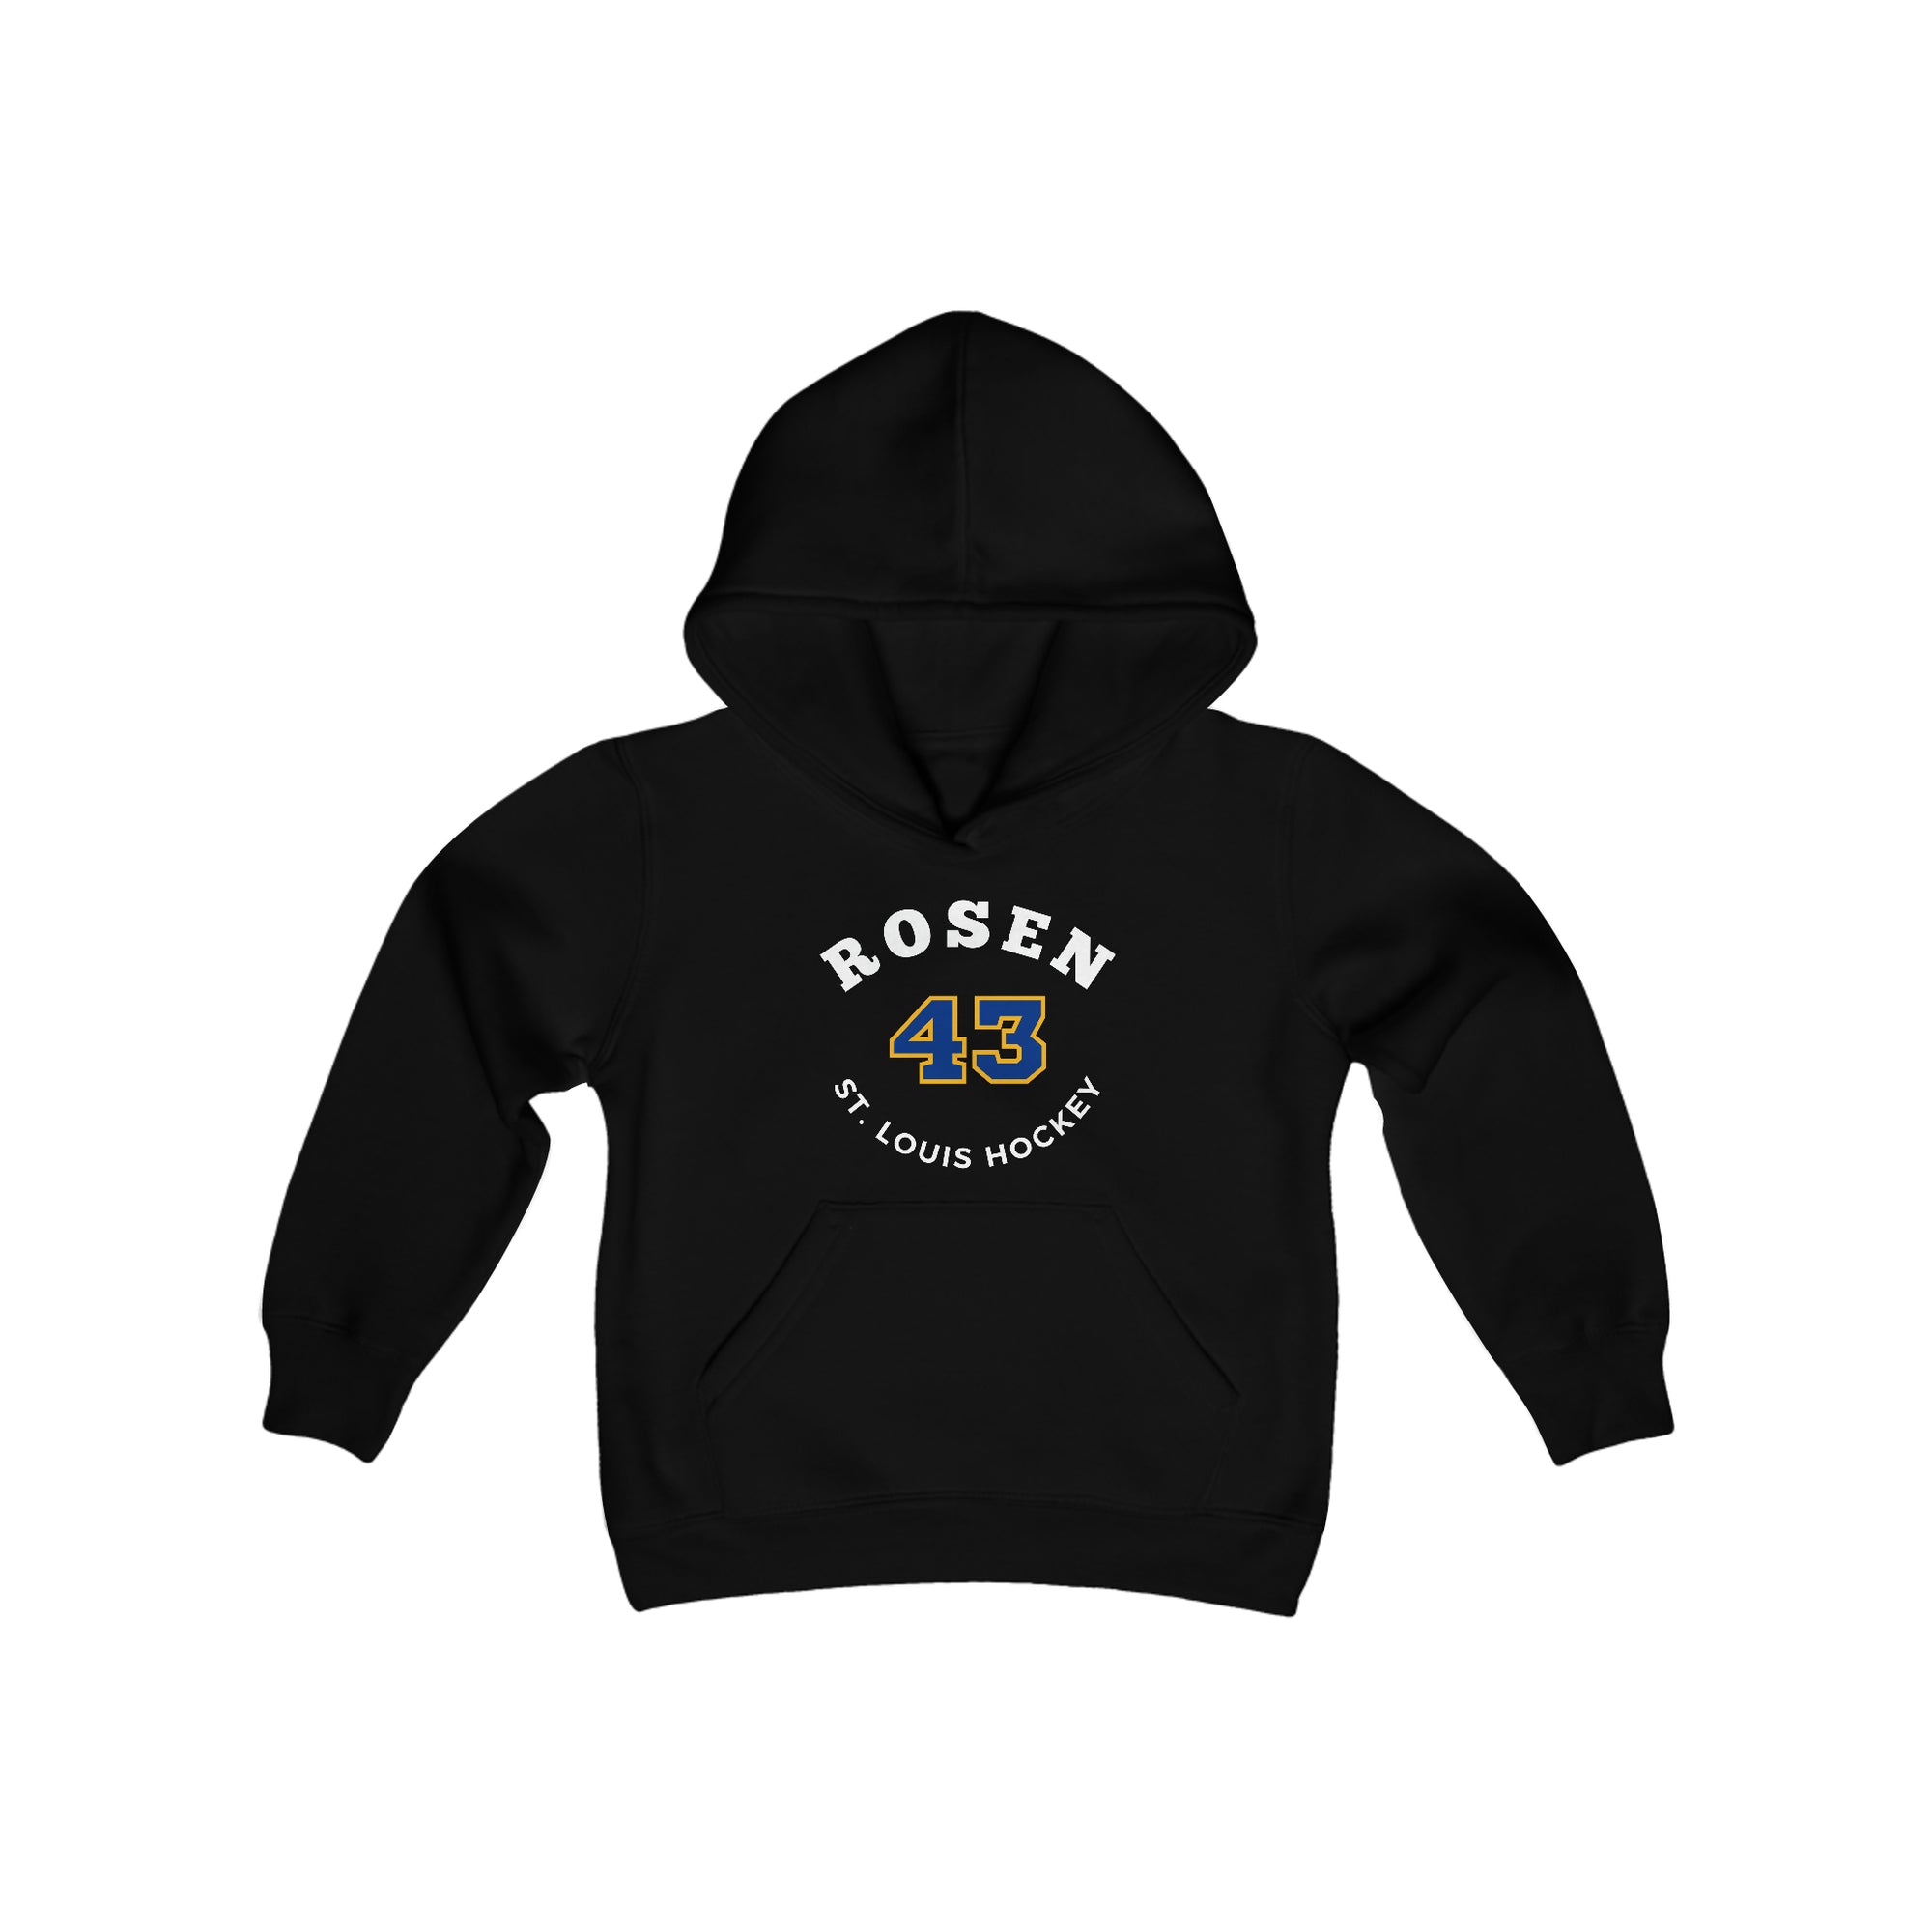 Rosen 43 St. Louis Hockey Number Arch Design Youth Hooded Sweatshirt